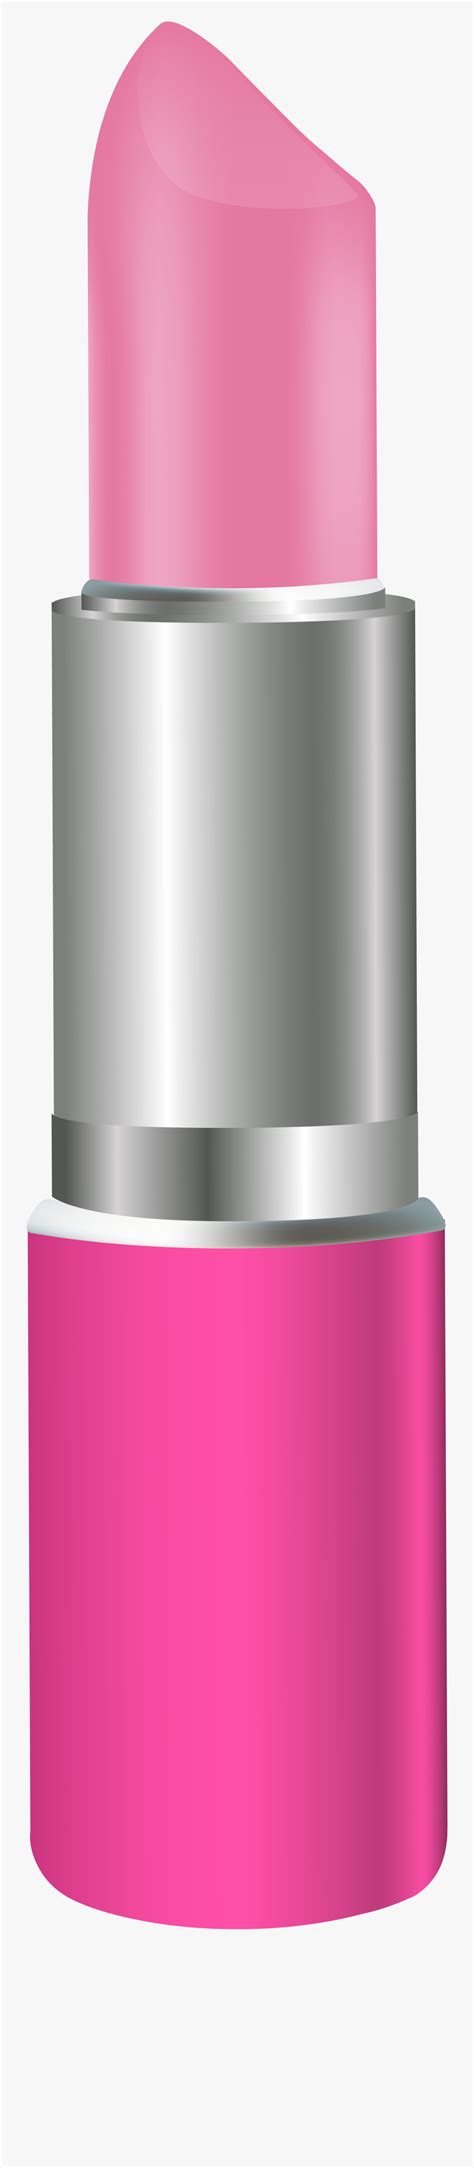 Lipstick Transparent Png Clip Art Image Pink Lipstick Clipart Free Transparent Clipart